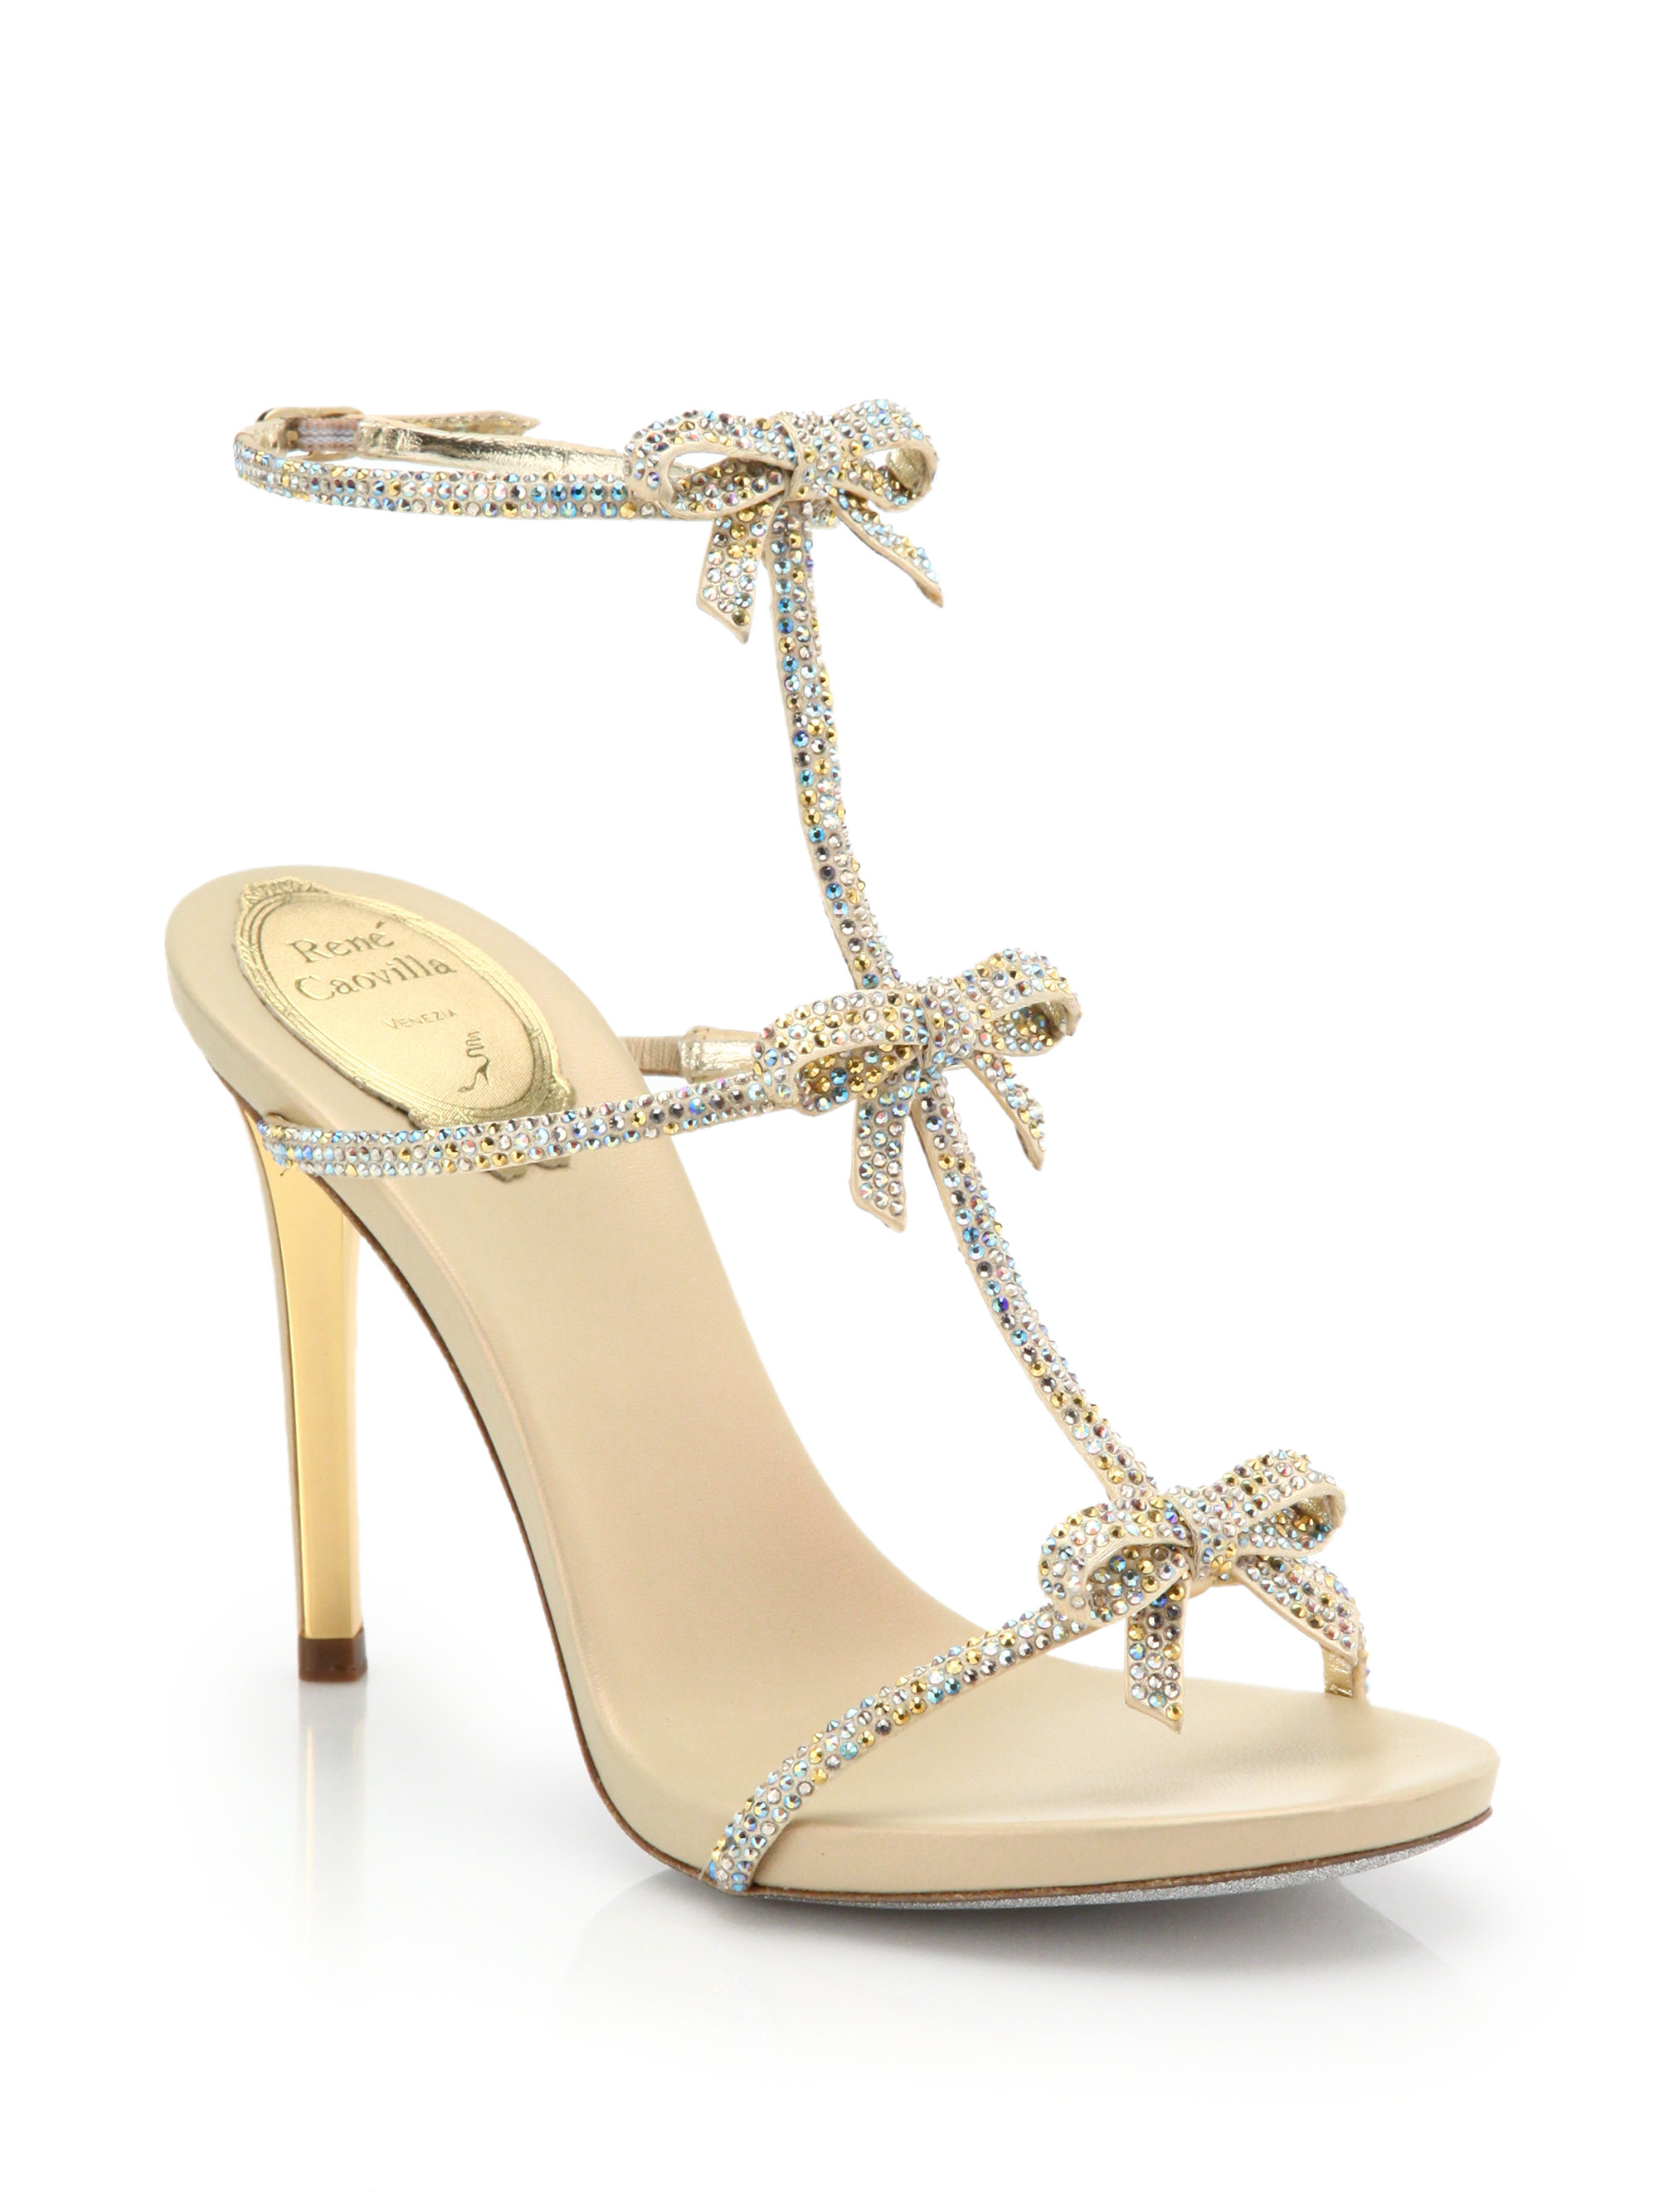 Rene Caovilla Strass Swarovski Crystal Bow Sandals in Metallic | Lyst